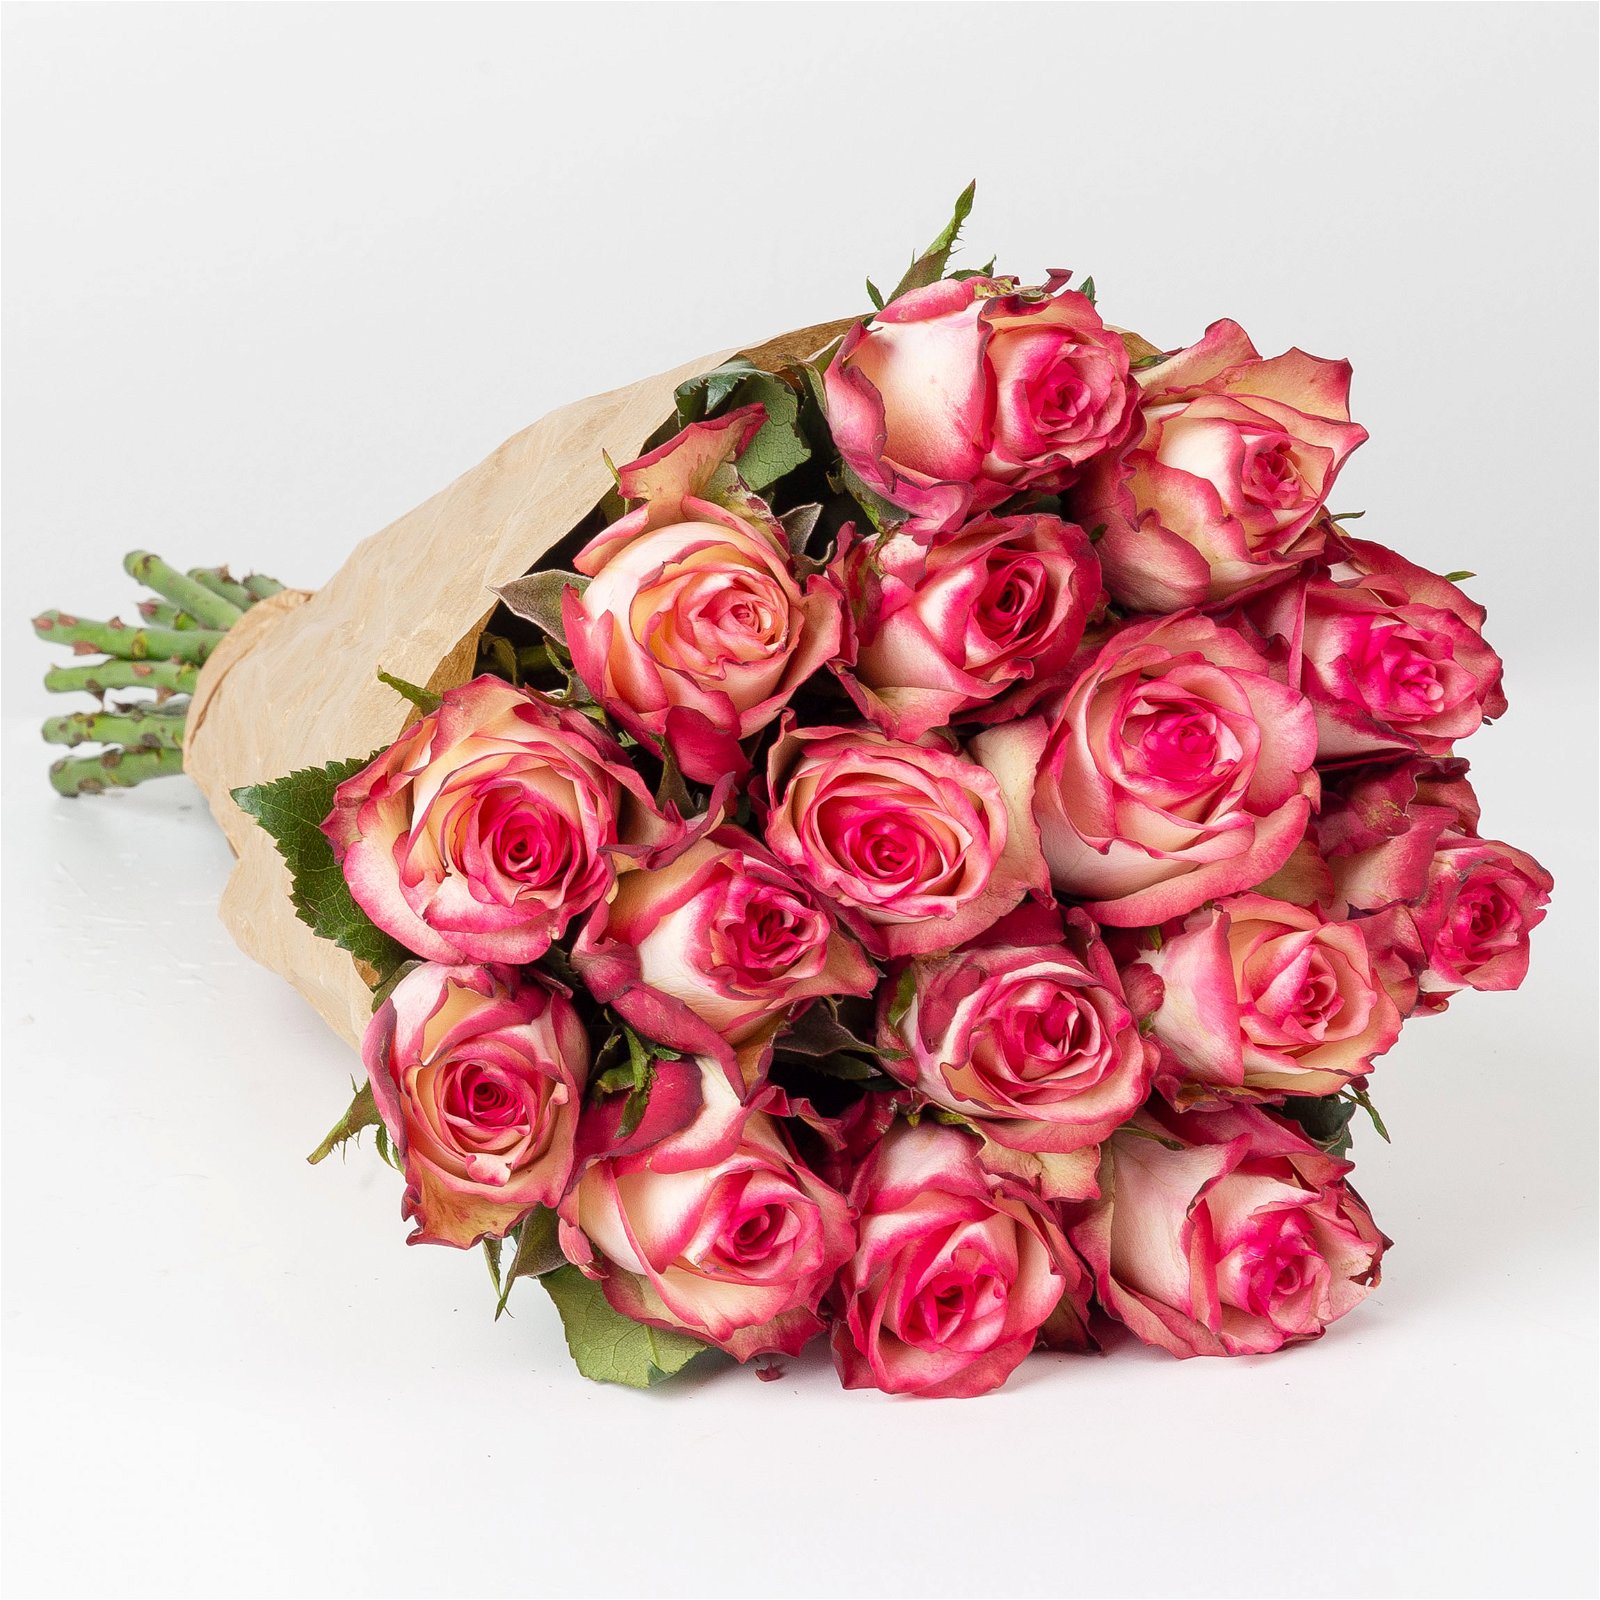 Blumenbund mit Rosen 'Paloma', rosa-creme, 15er-Bund, inkl. gratis Grußkarte